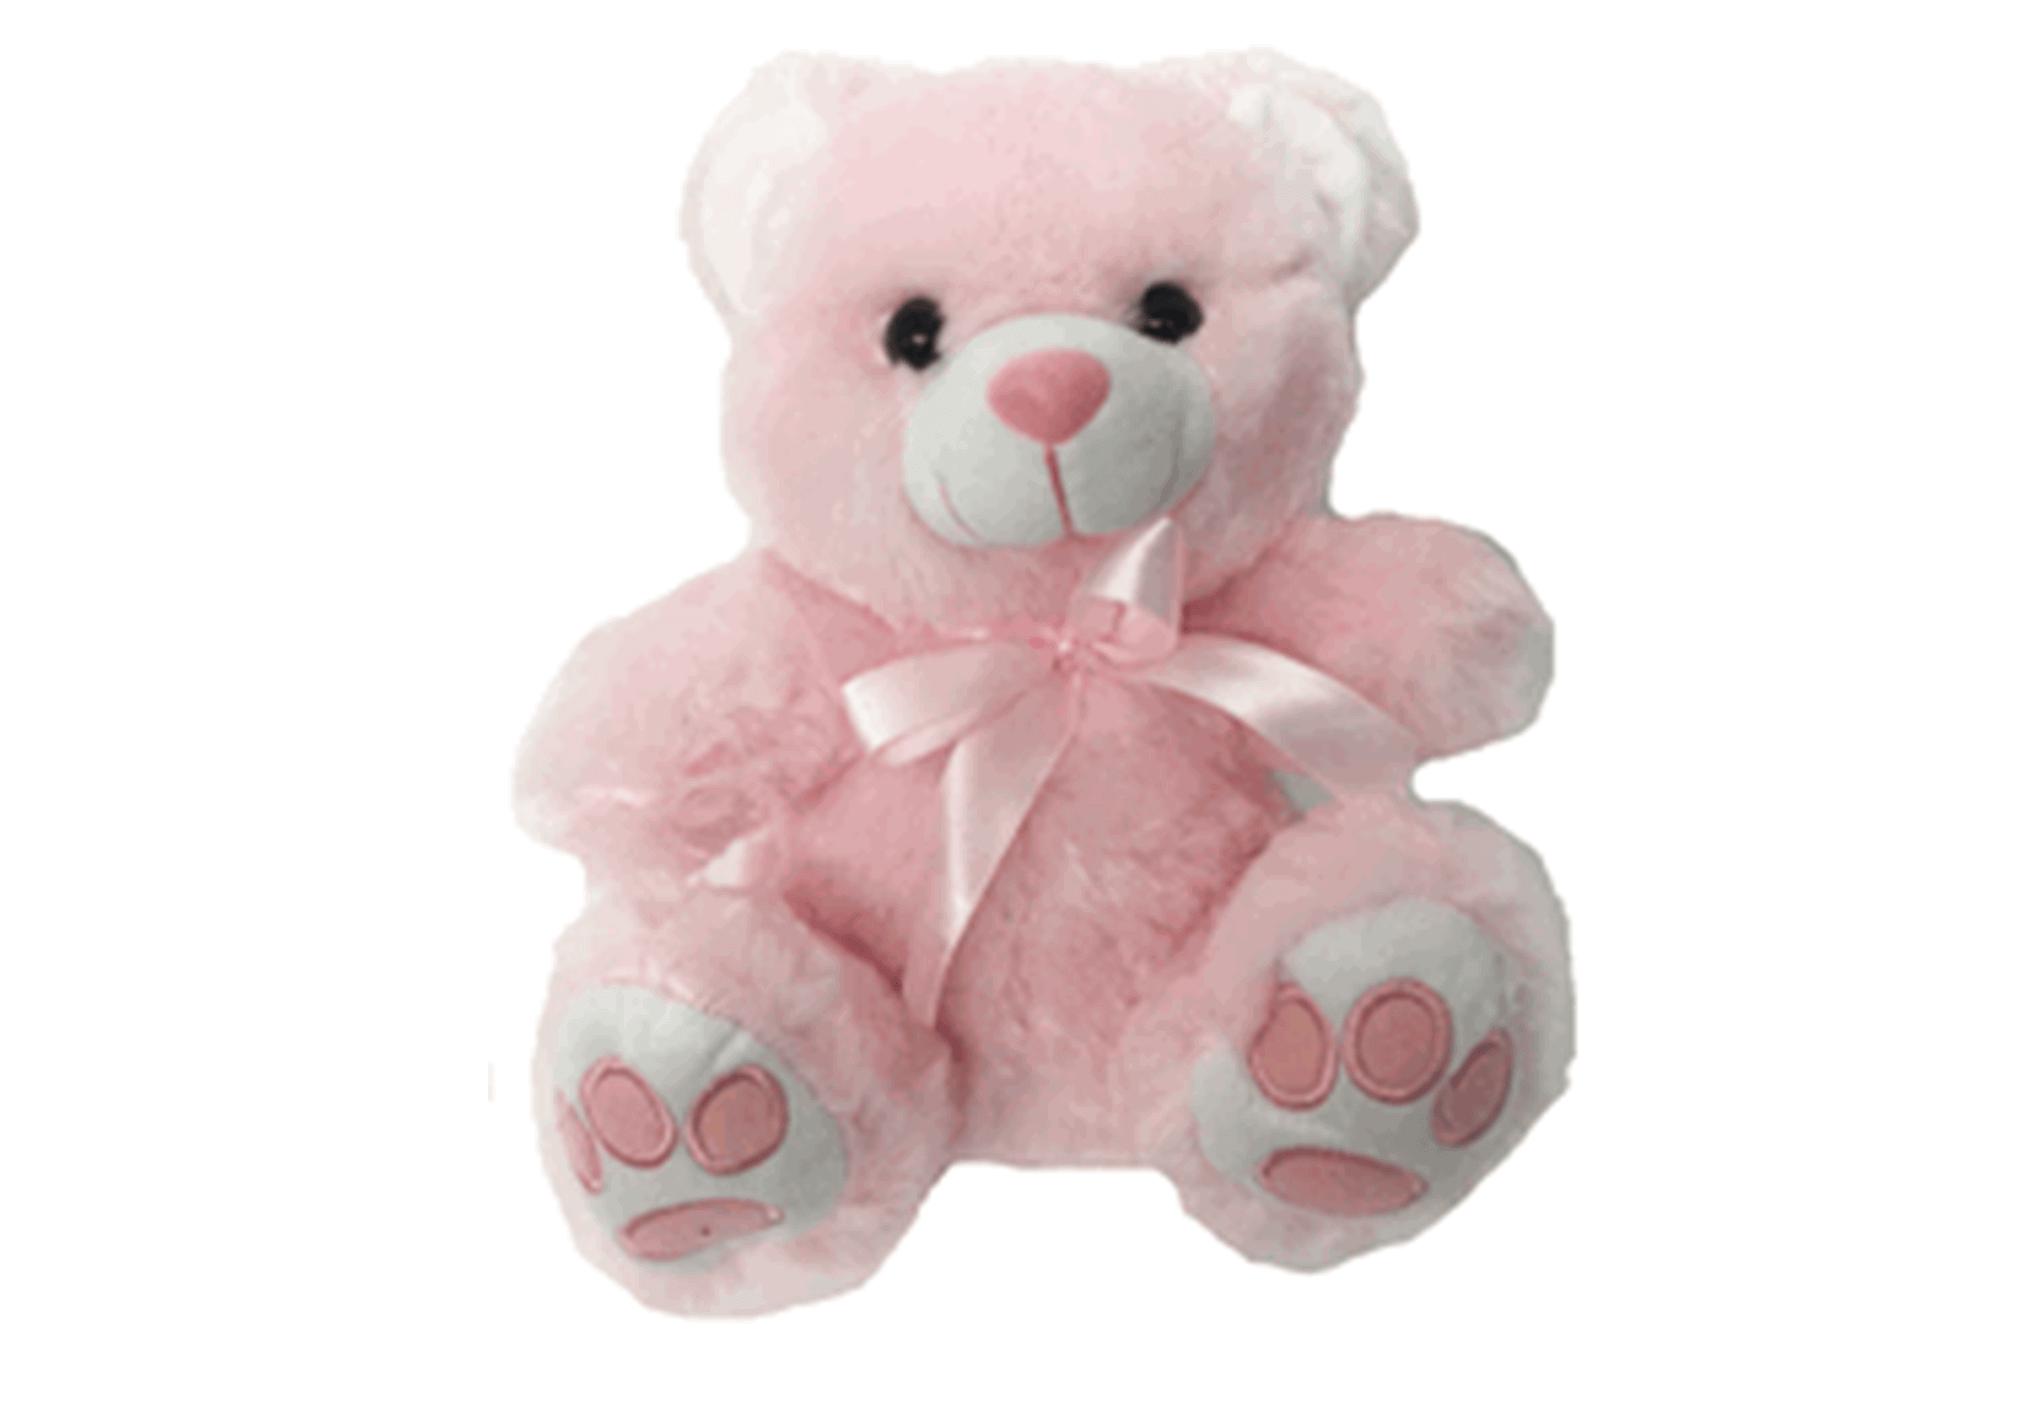 pink teddy